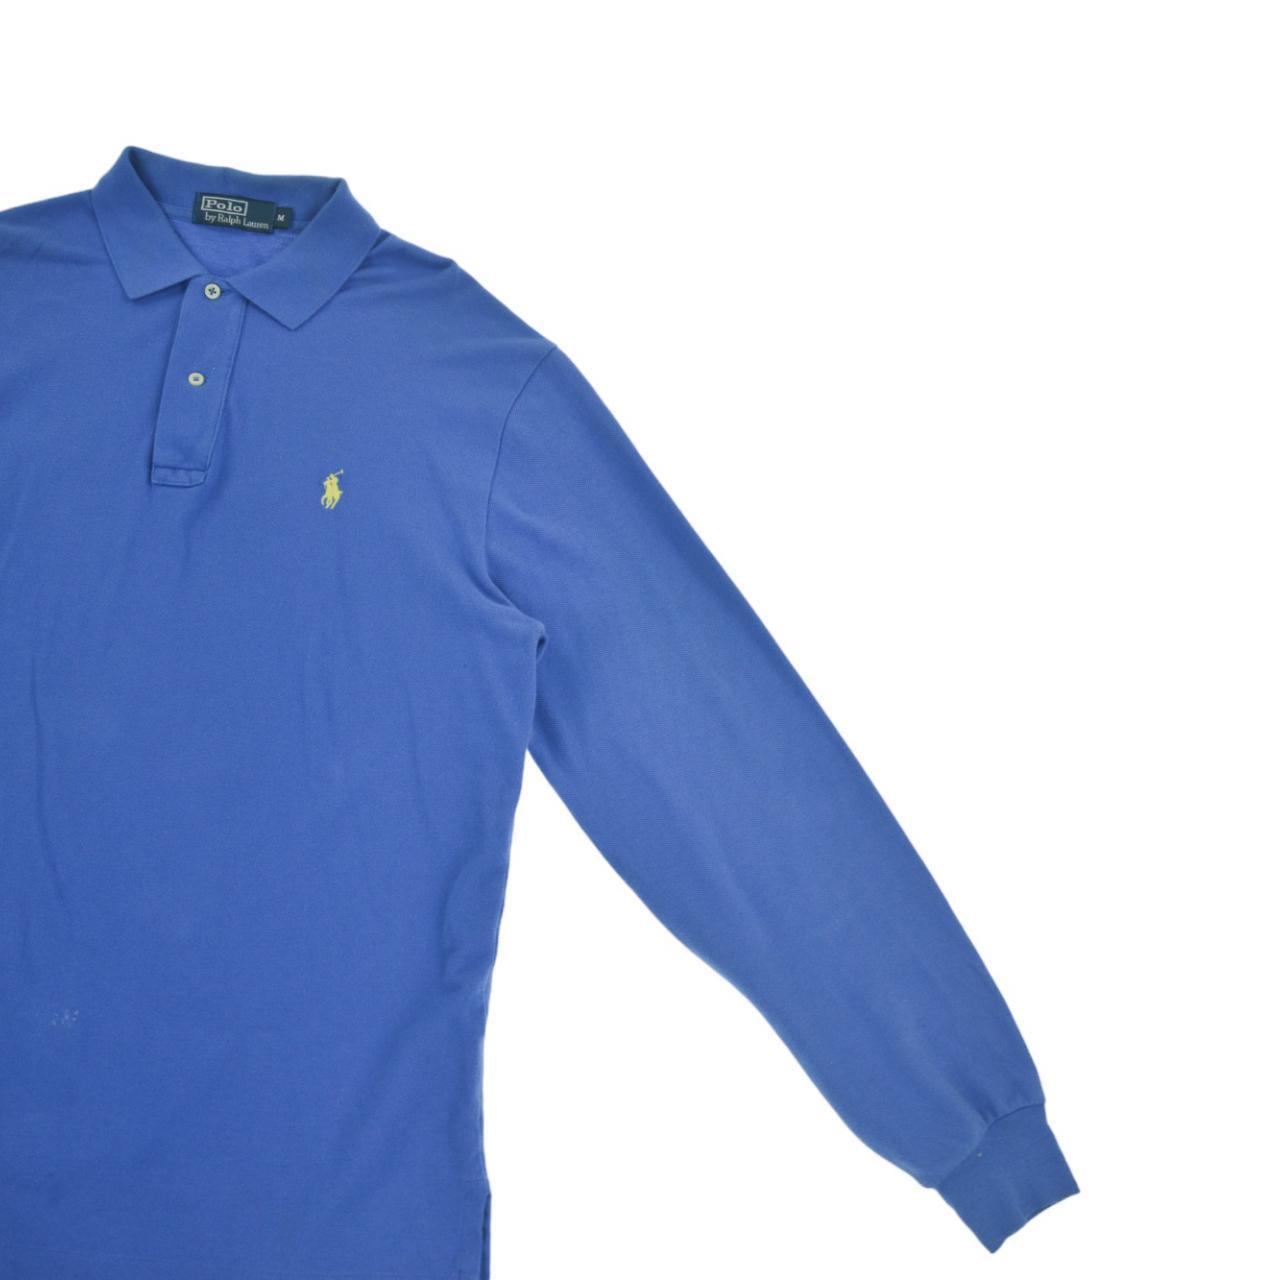 Vintage Polo Ralph Lauren Long Sleeve Polo Shirt Size L - Known Source